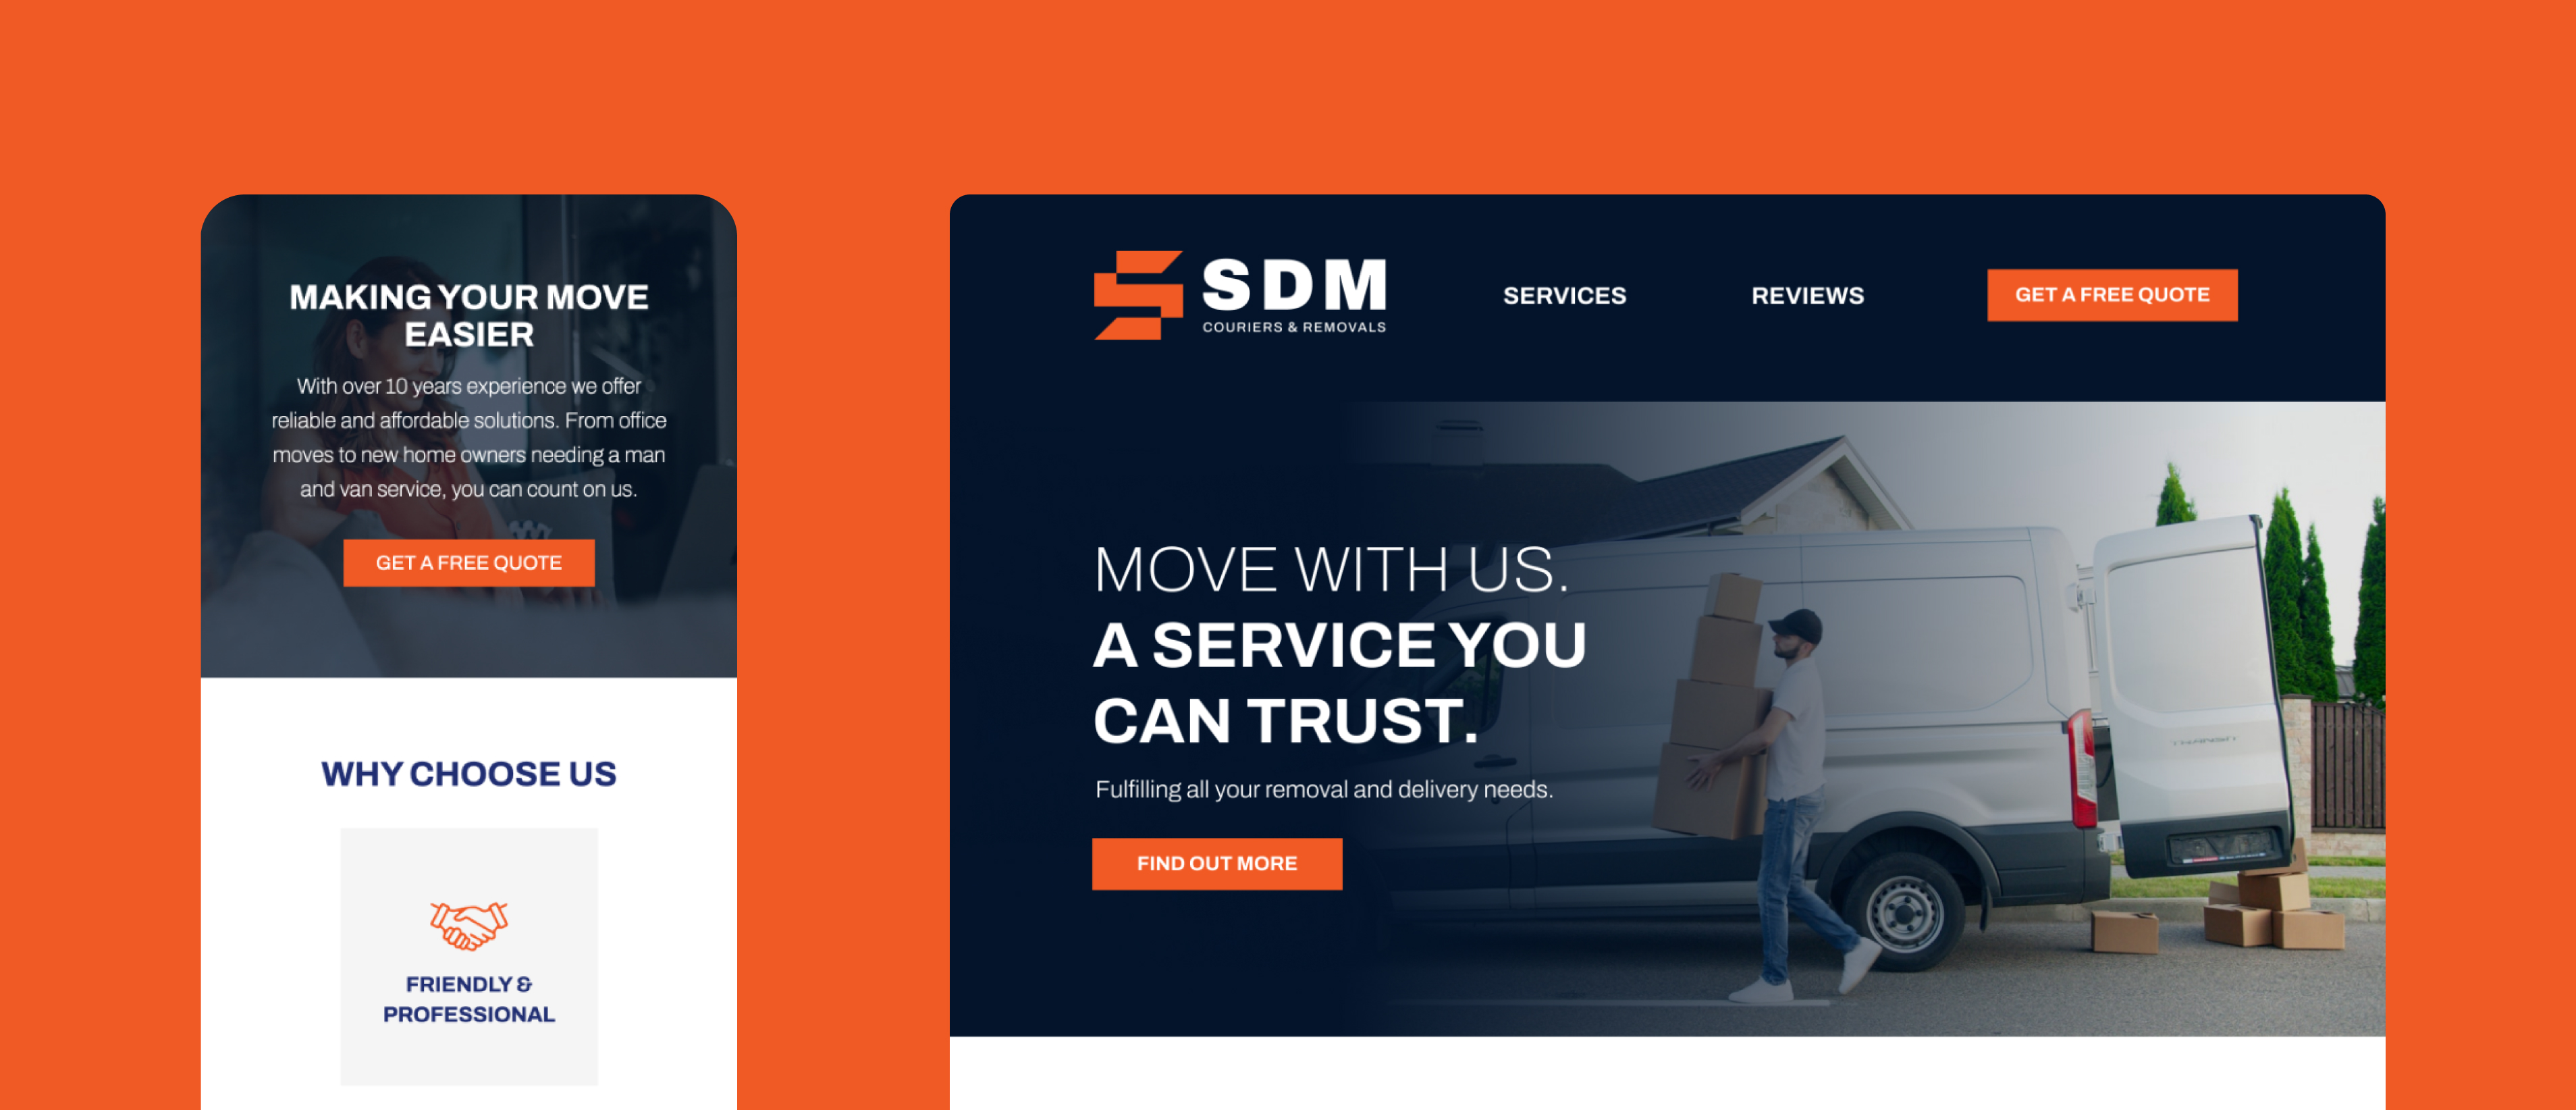 SDM Site Banner